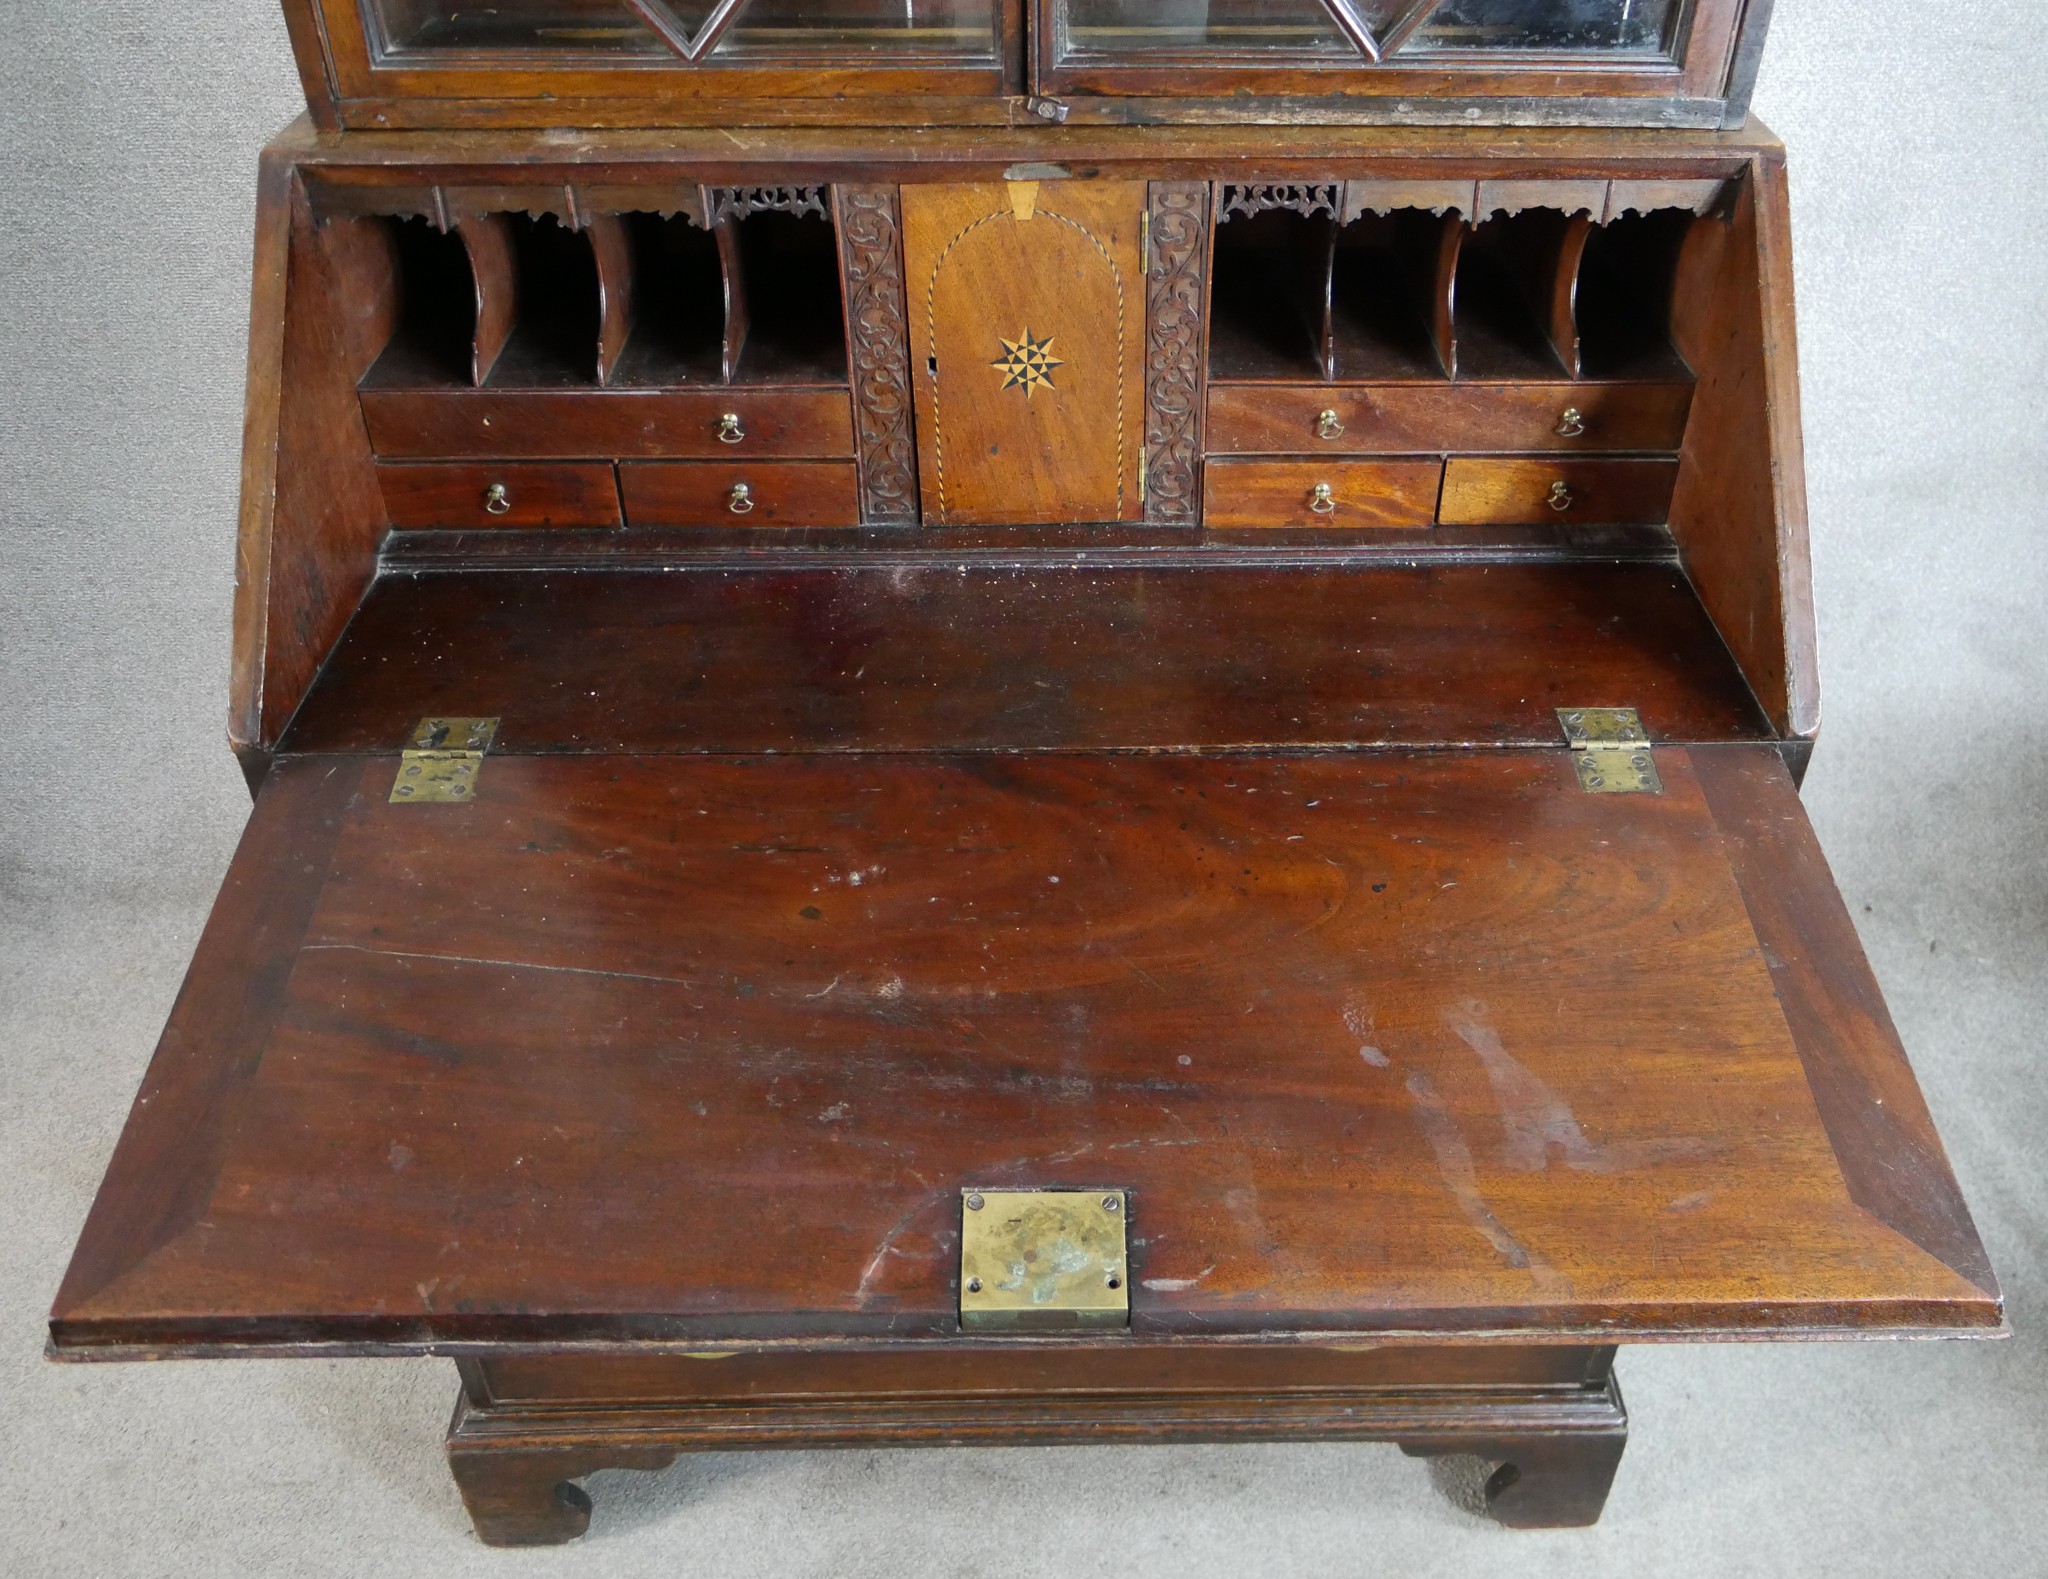 A George III mahogany bureau bookcase, the twin glazed doors opening to reveal adjustable shelves - Image 2 of 5